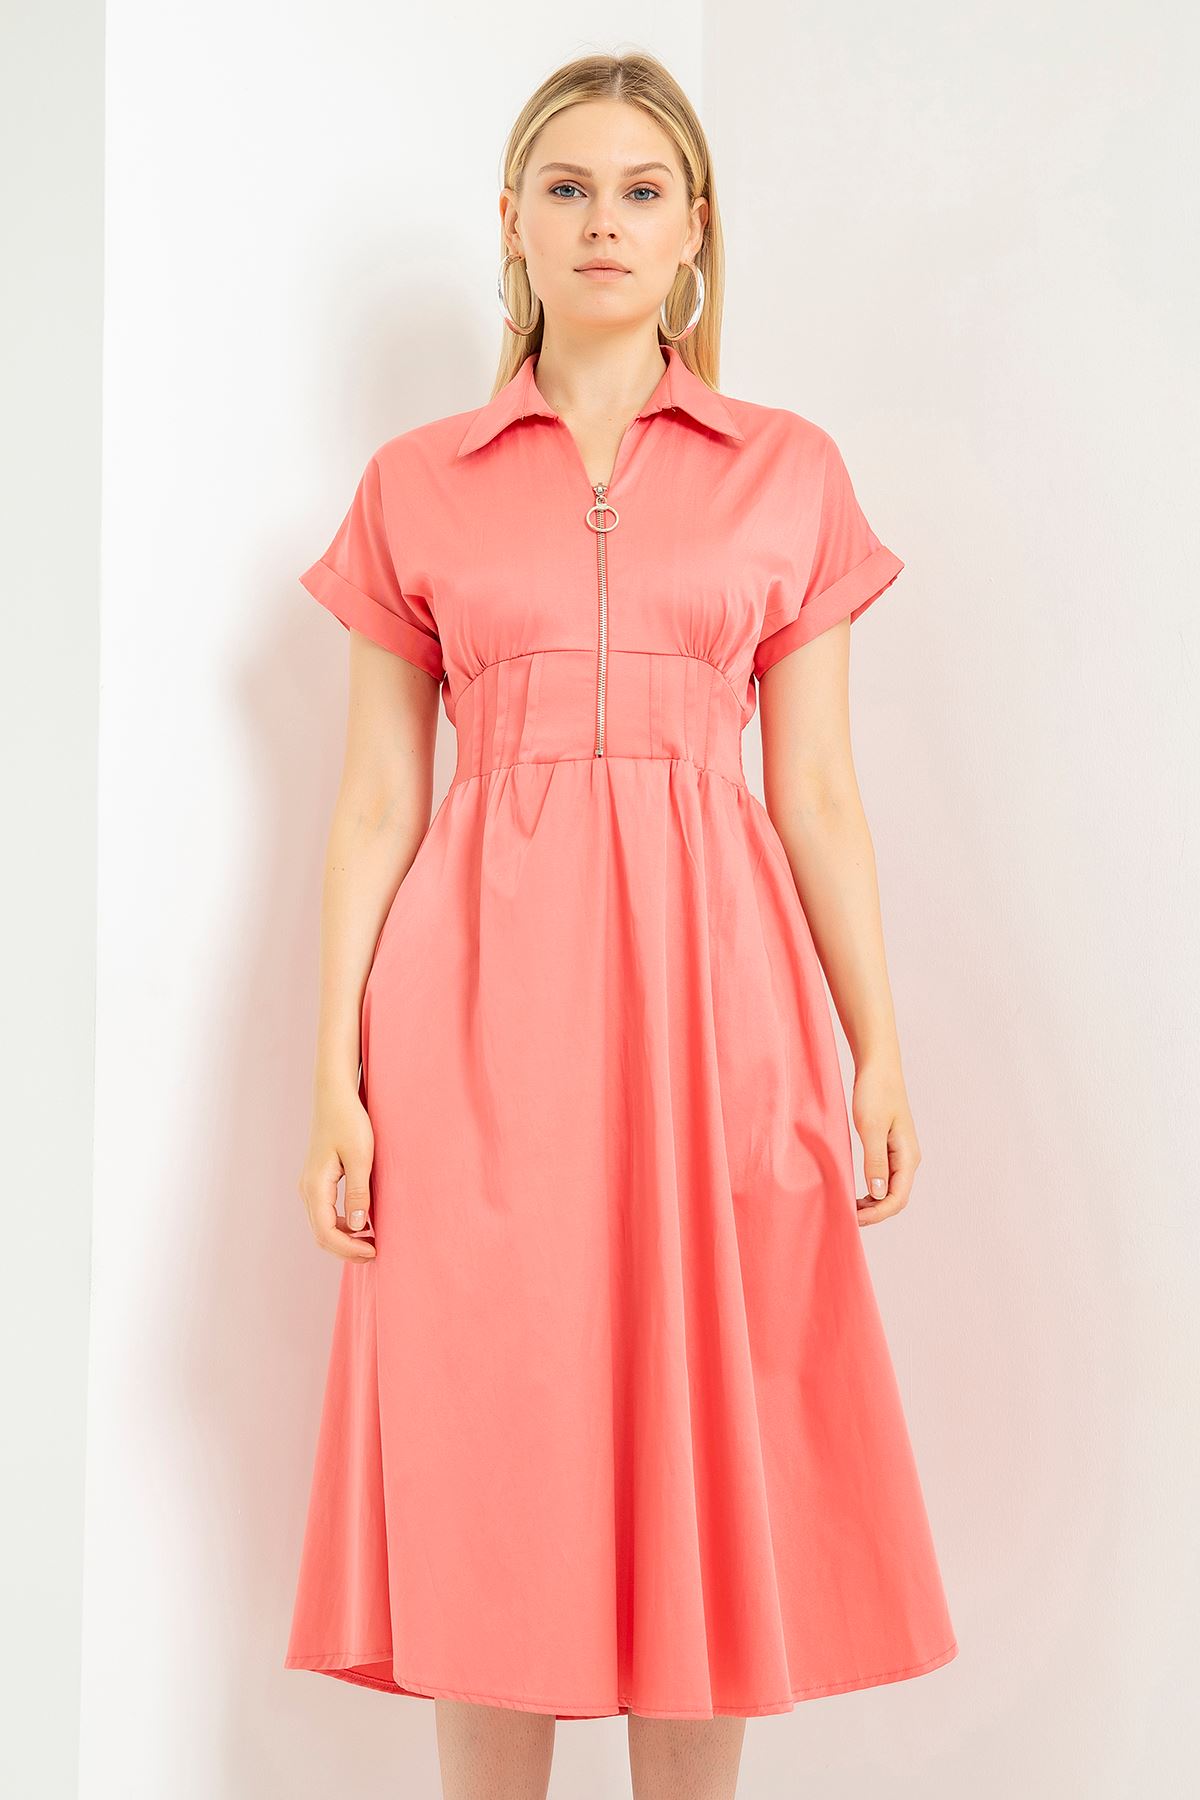 Erika Fabric Short Sleeve Zip Neck Midi Full Fit Women Dress - Pomegrante Flower